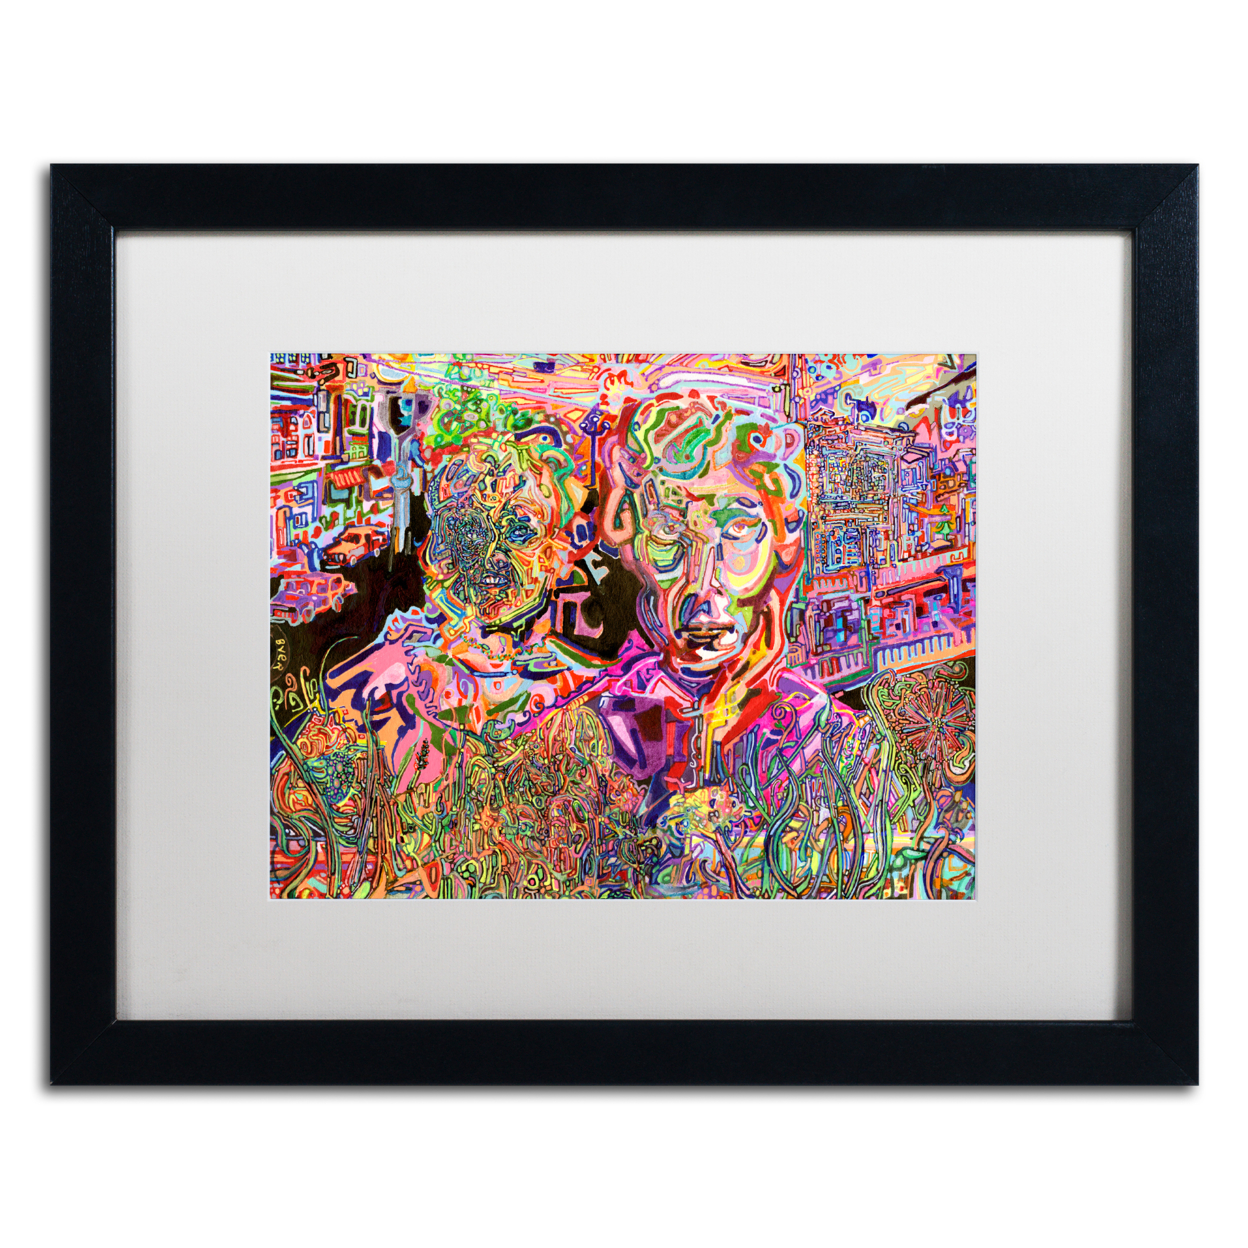 Josh Byer 'Flower Box' Black Wooden Framed Art 18 X 22 Inches